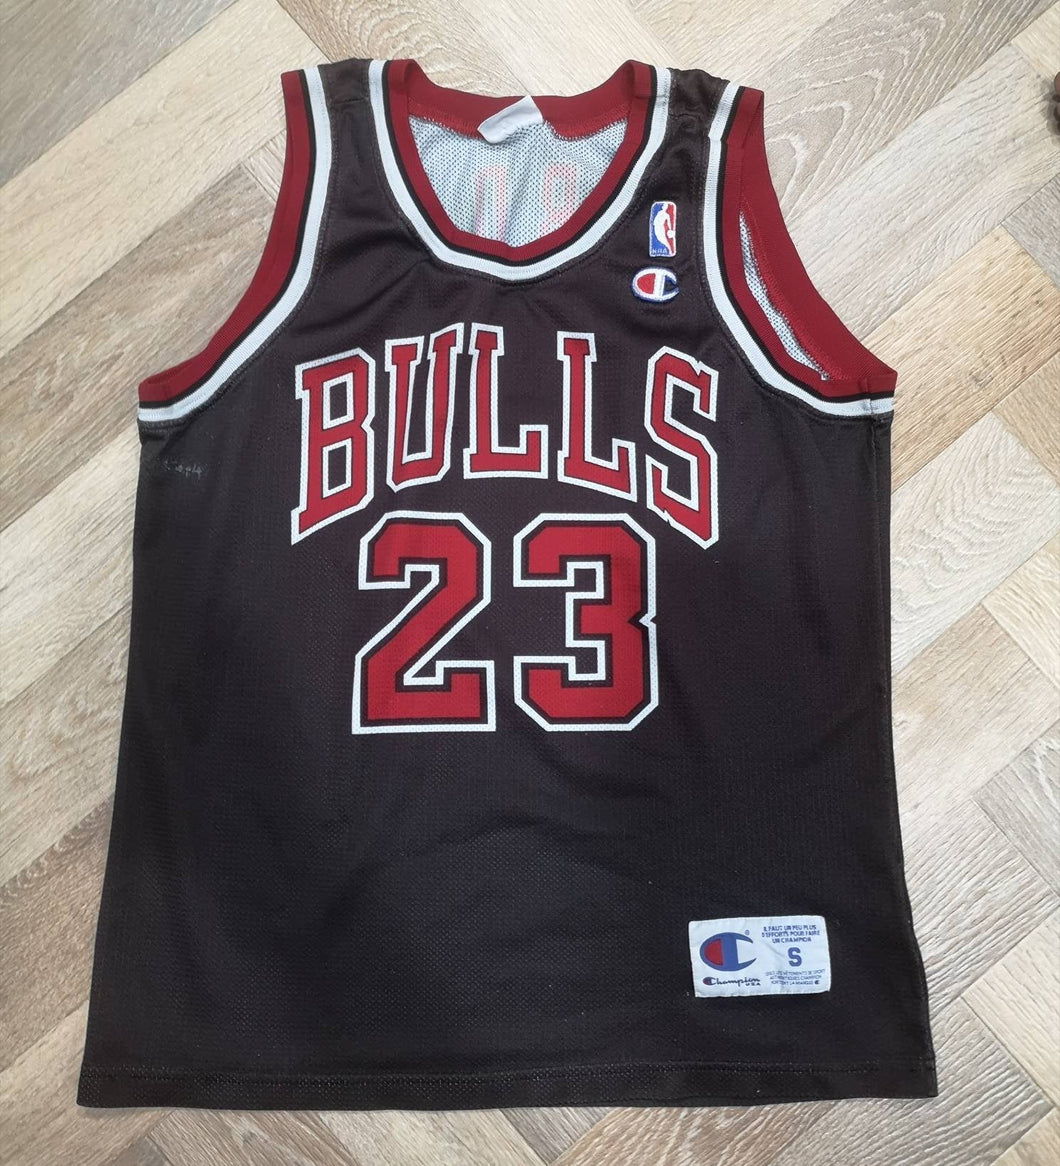 Jersey Michael Jordan Chicago Bulls NBA 1990's Vintage